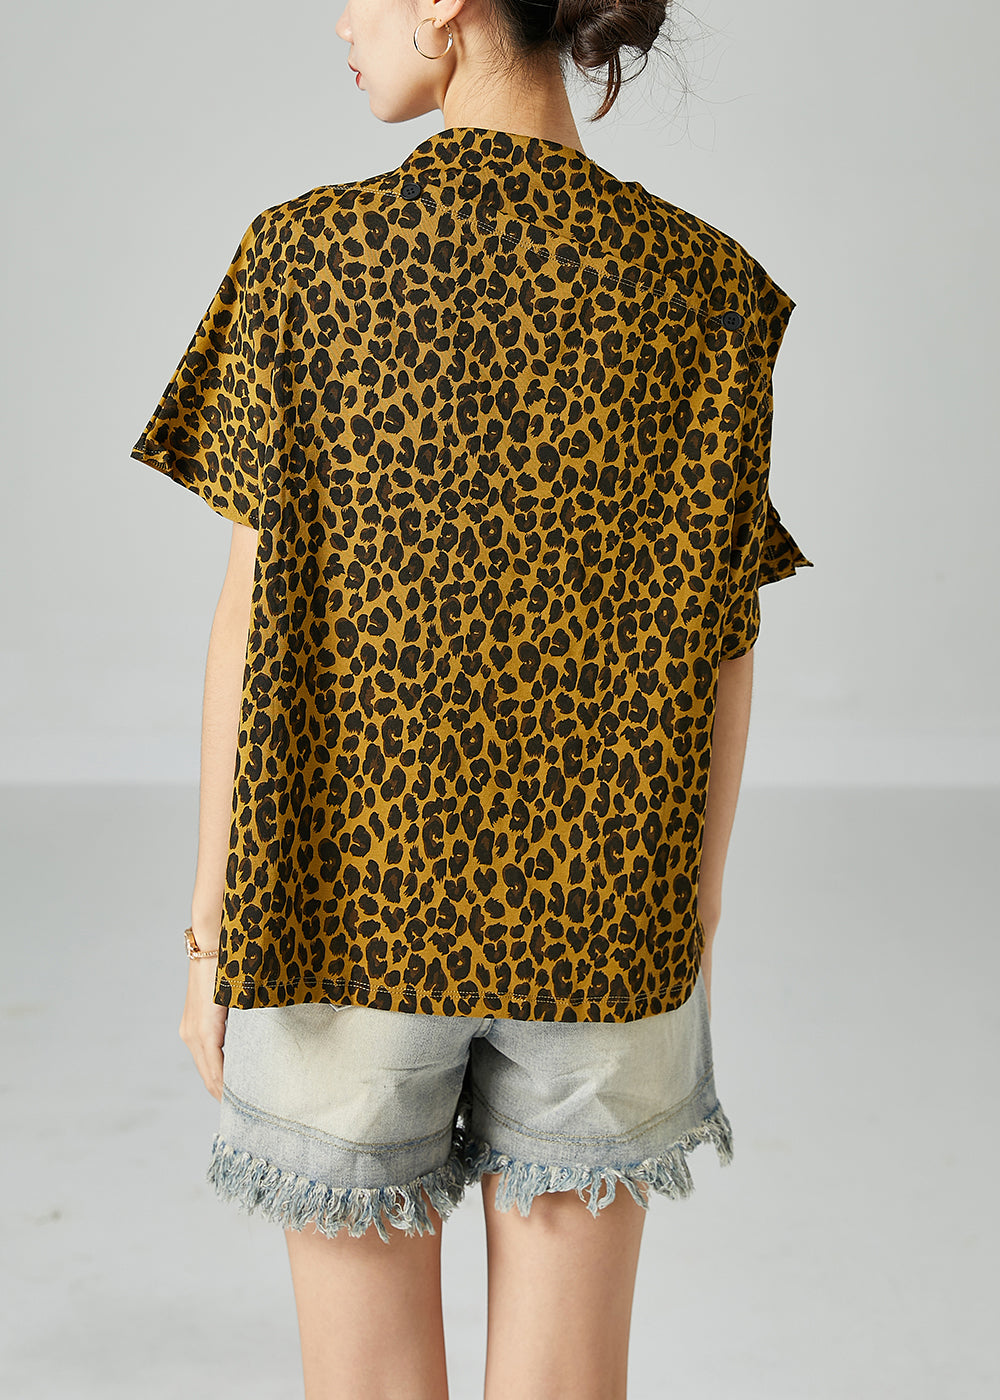 Boho Yellow Cold Shoulder Leopard Print Cotton Tops Summer